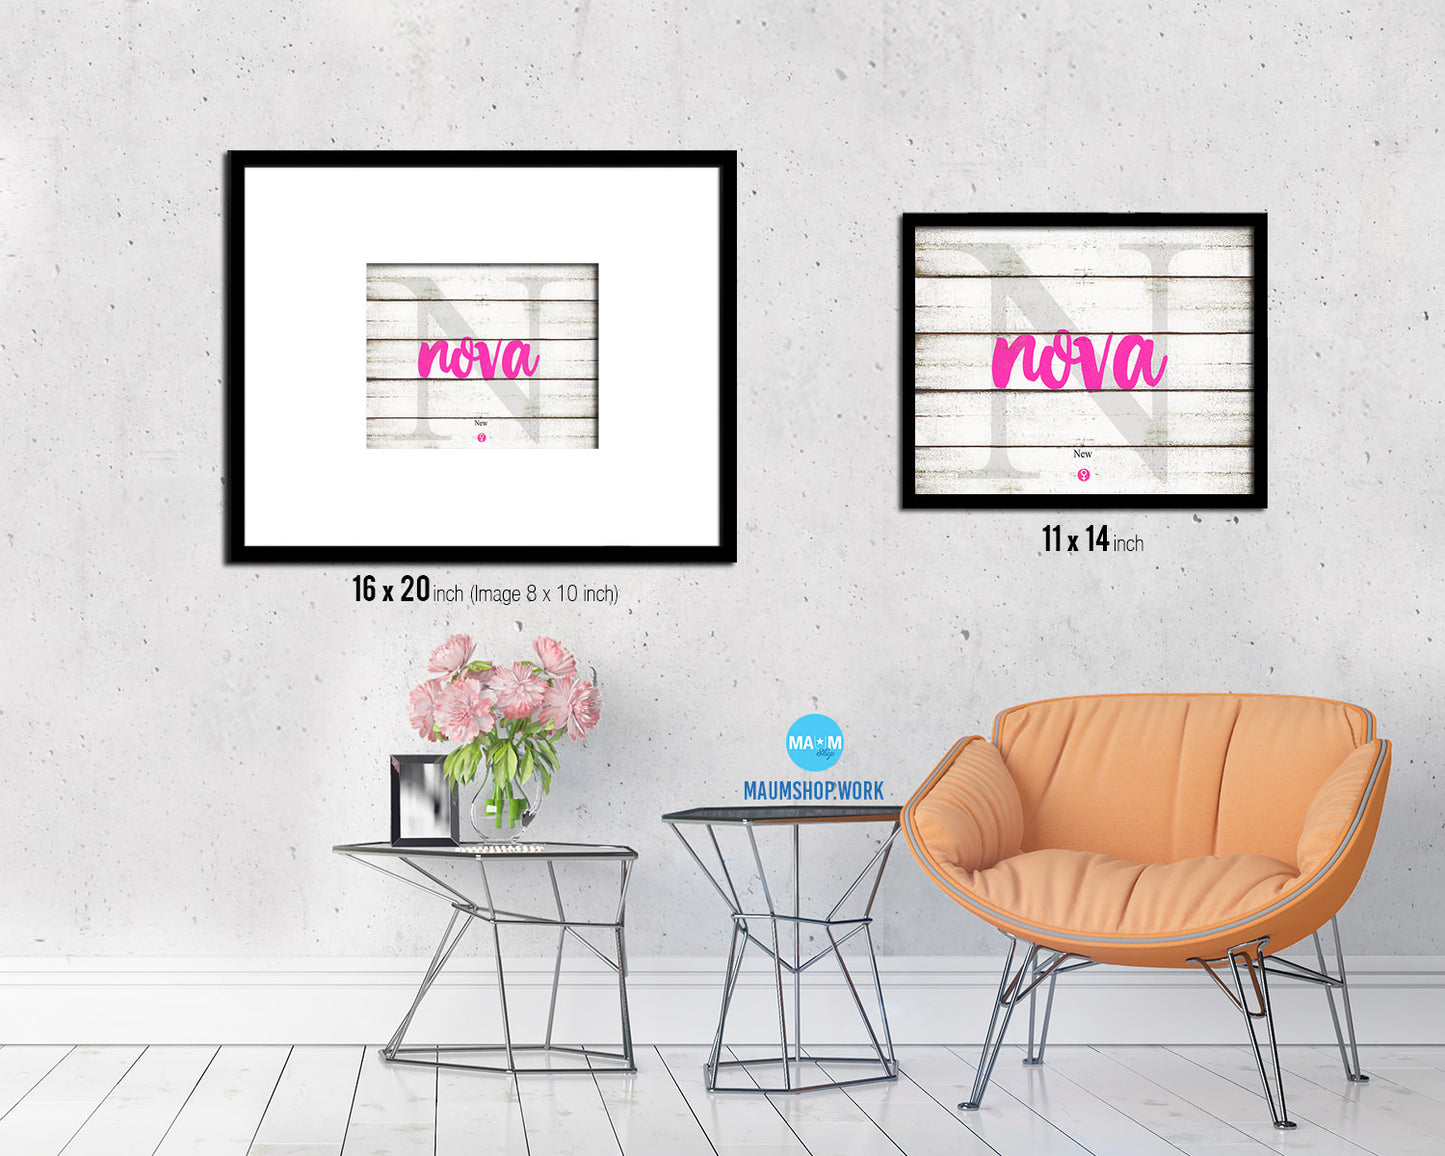 Nova Personalized Biblical Name Plate Art Framed Print Kids Baby Room Wall Decor Gifts